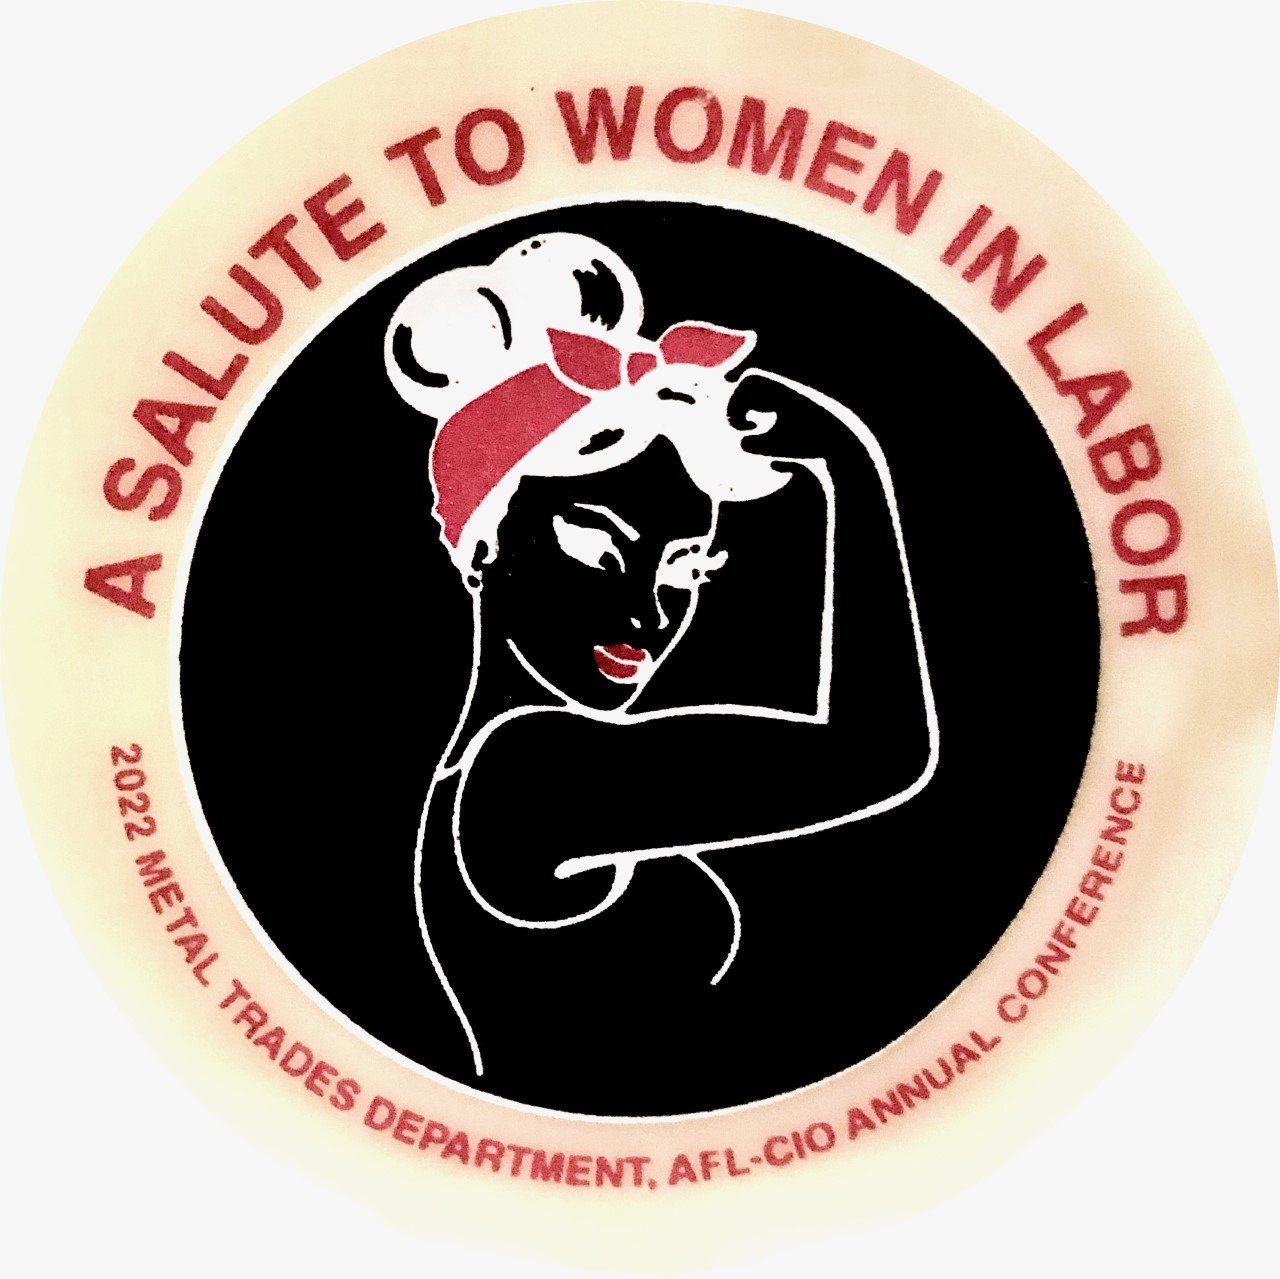 MTD_A Salute to Women in Labor.jpg